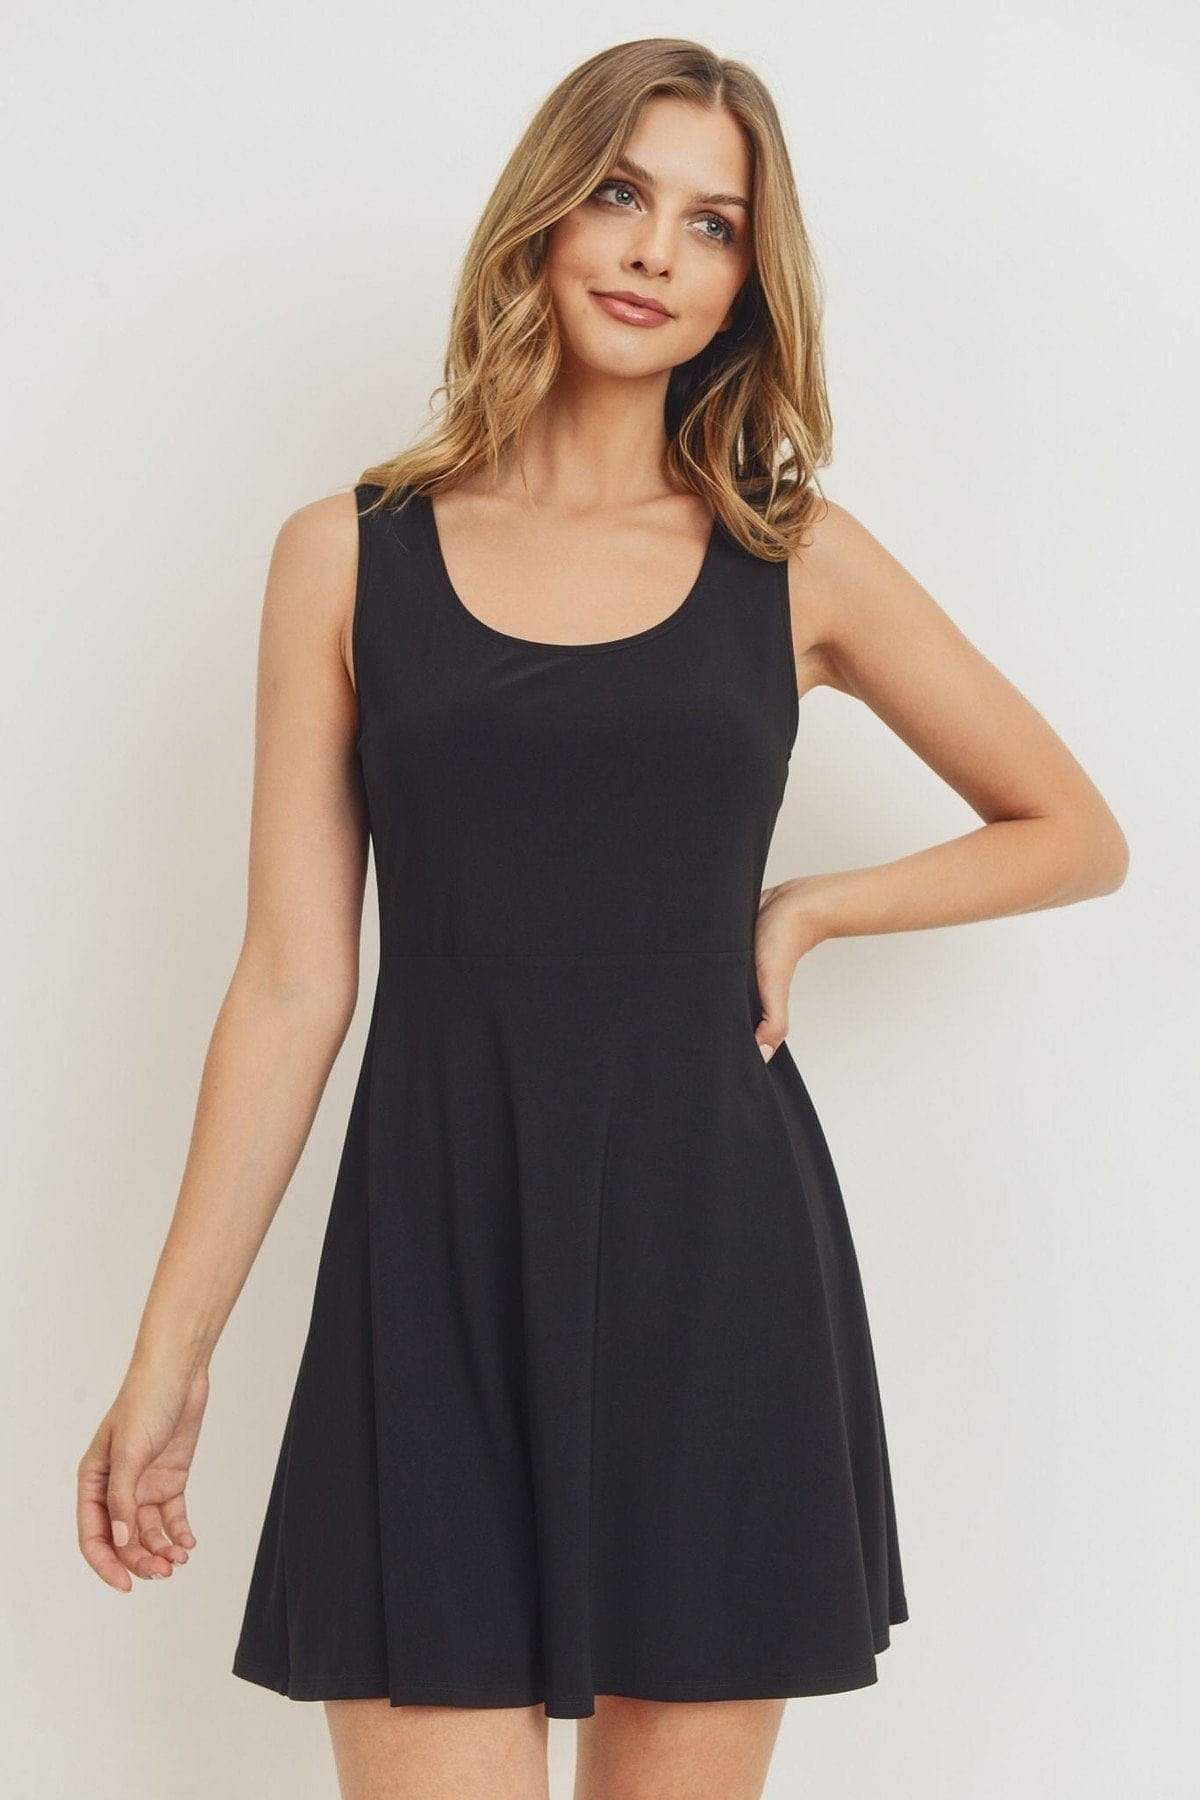 Short Sleeve Mini Dress-Black - Shopping Therapy, LLC dress